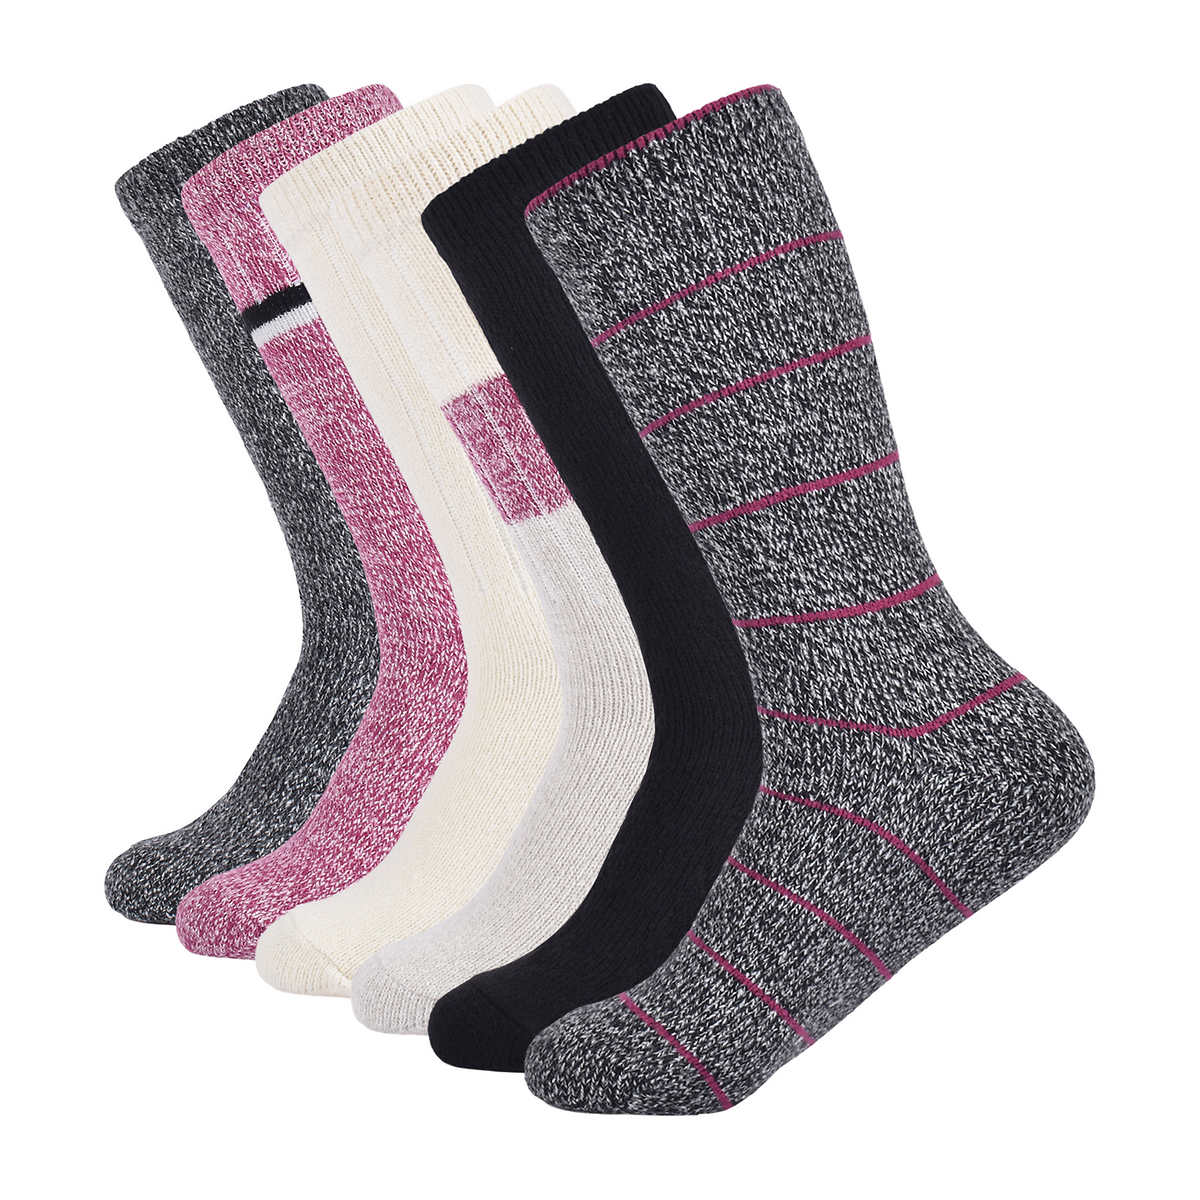 Lucky Brand Women's 6-Pair Shoe Size: 5-10 Super Soft Yarn Cozy Boot Socks